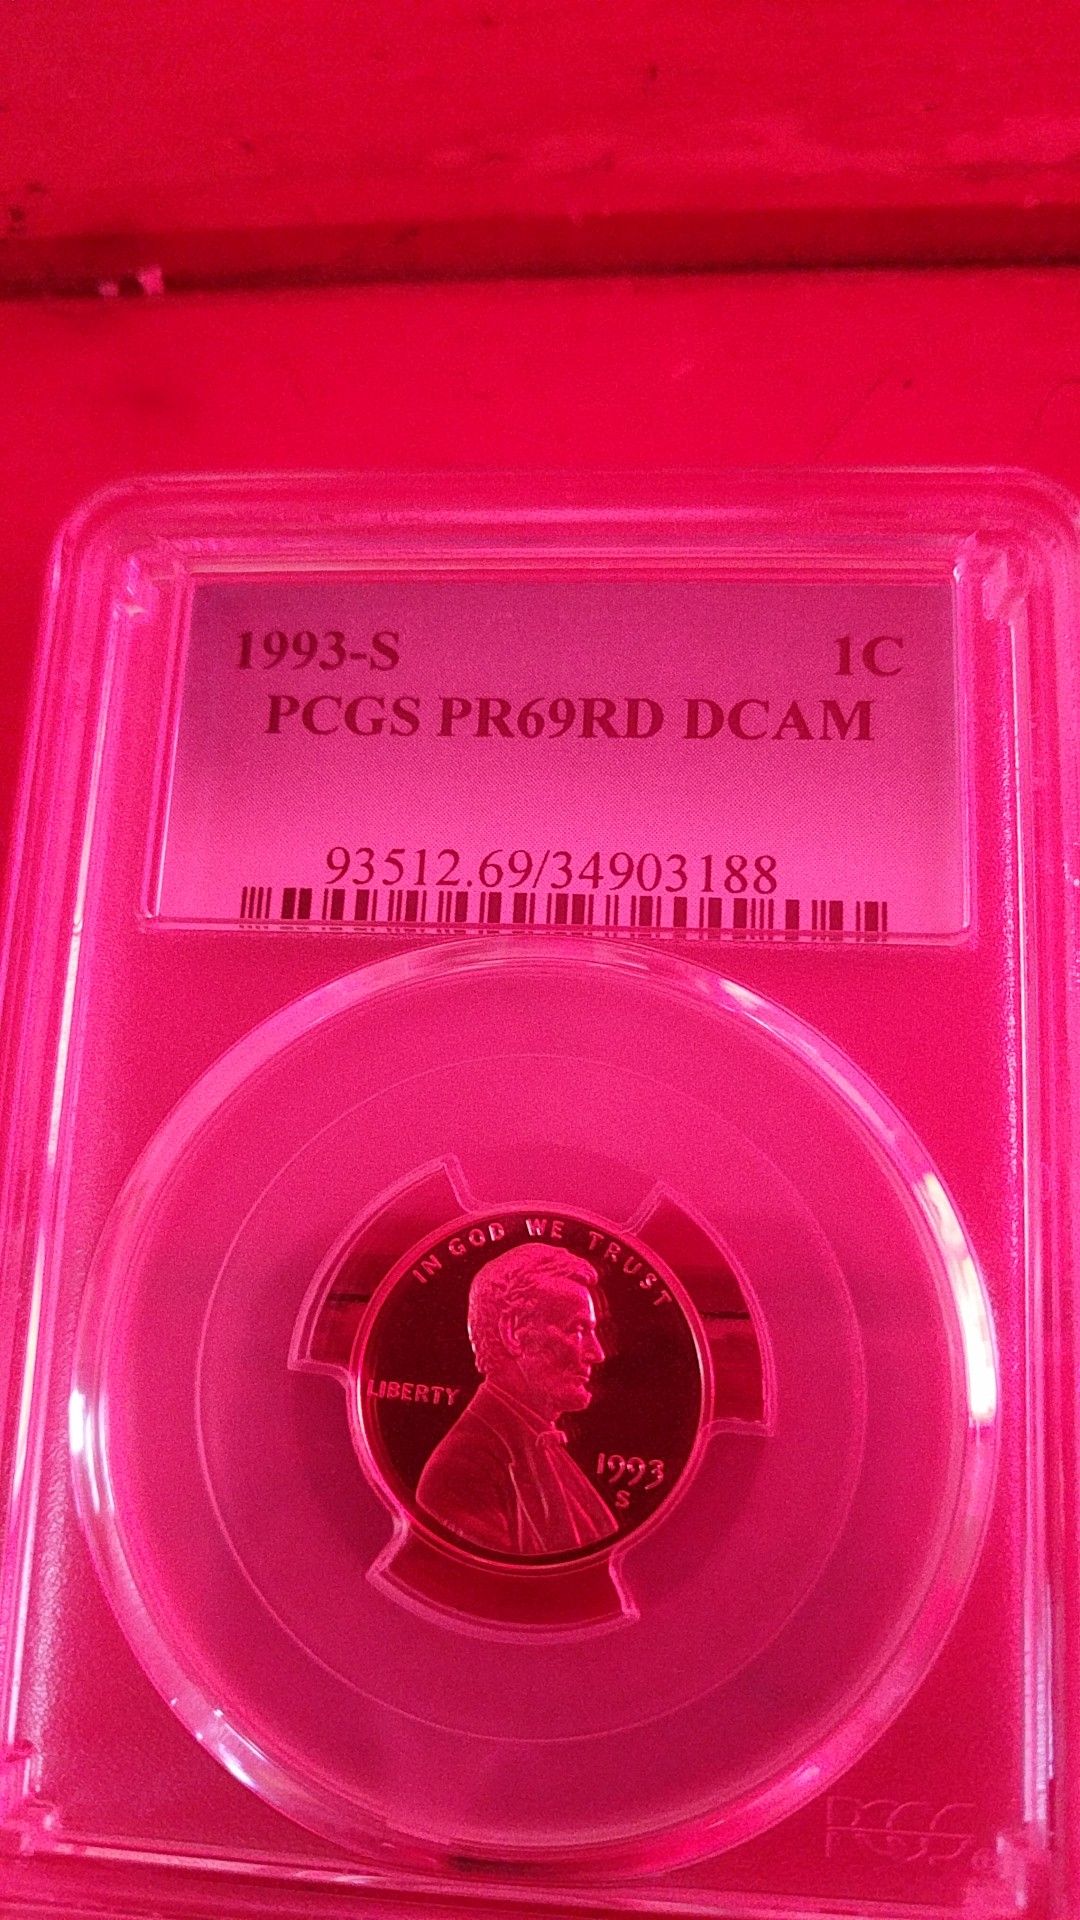 PCGS PR69 DCAM 1993s cent